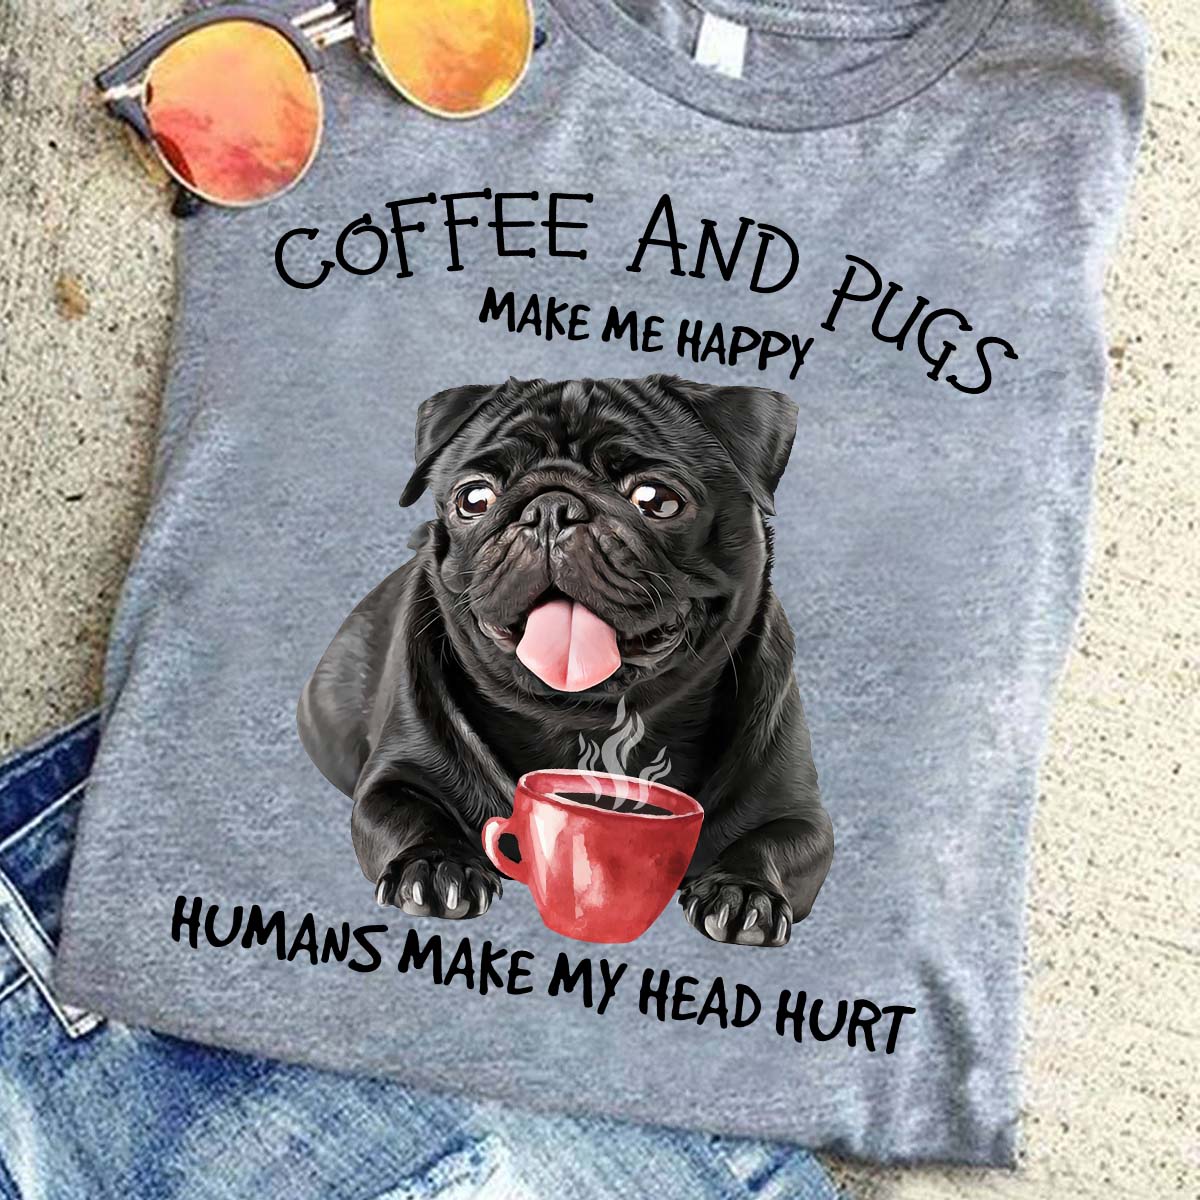 Coffee and pugs make me happy humans make my head hurt